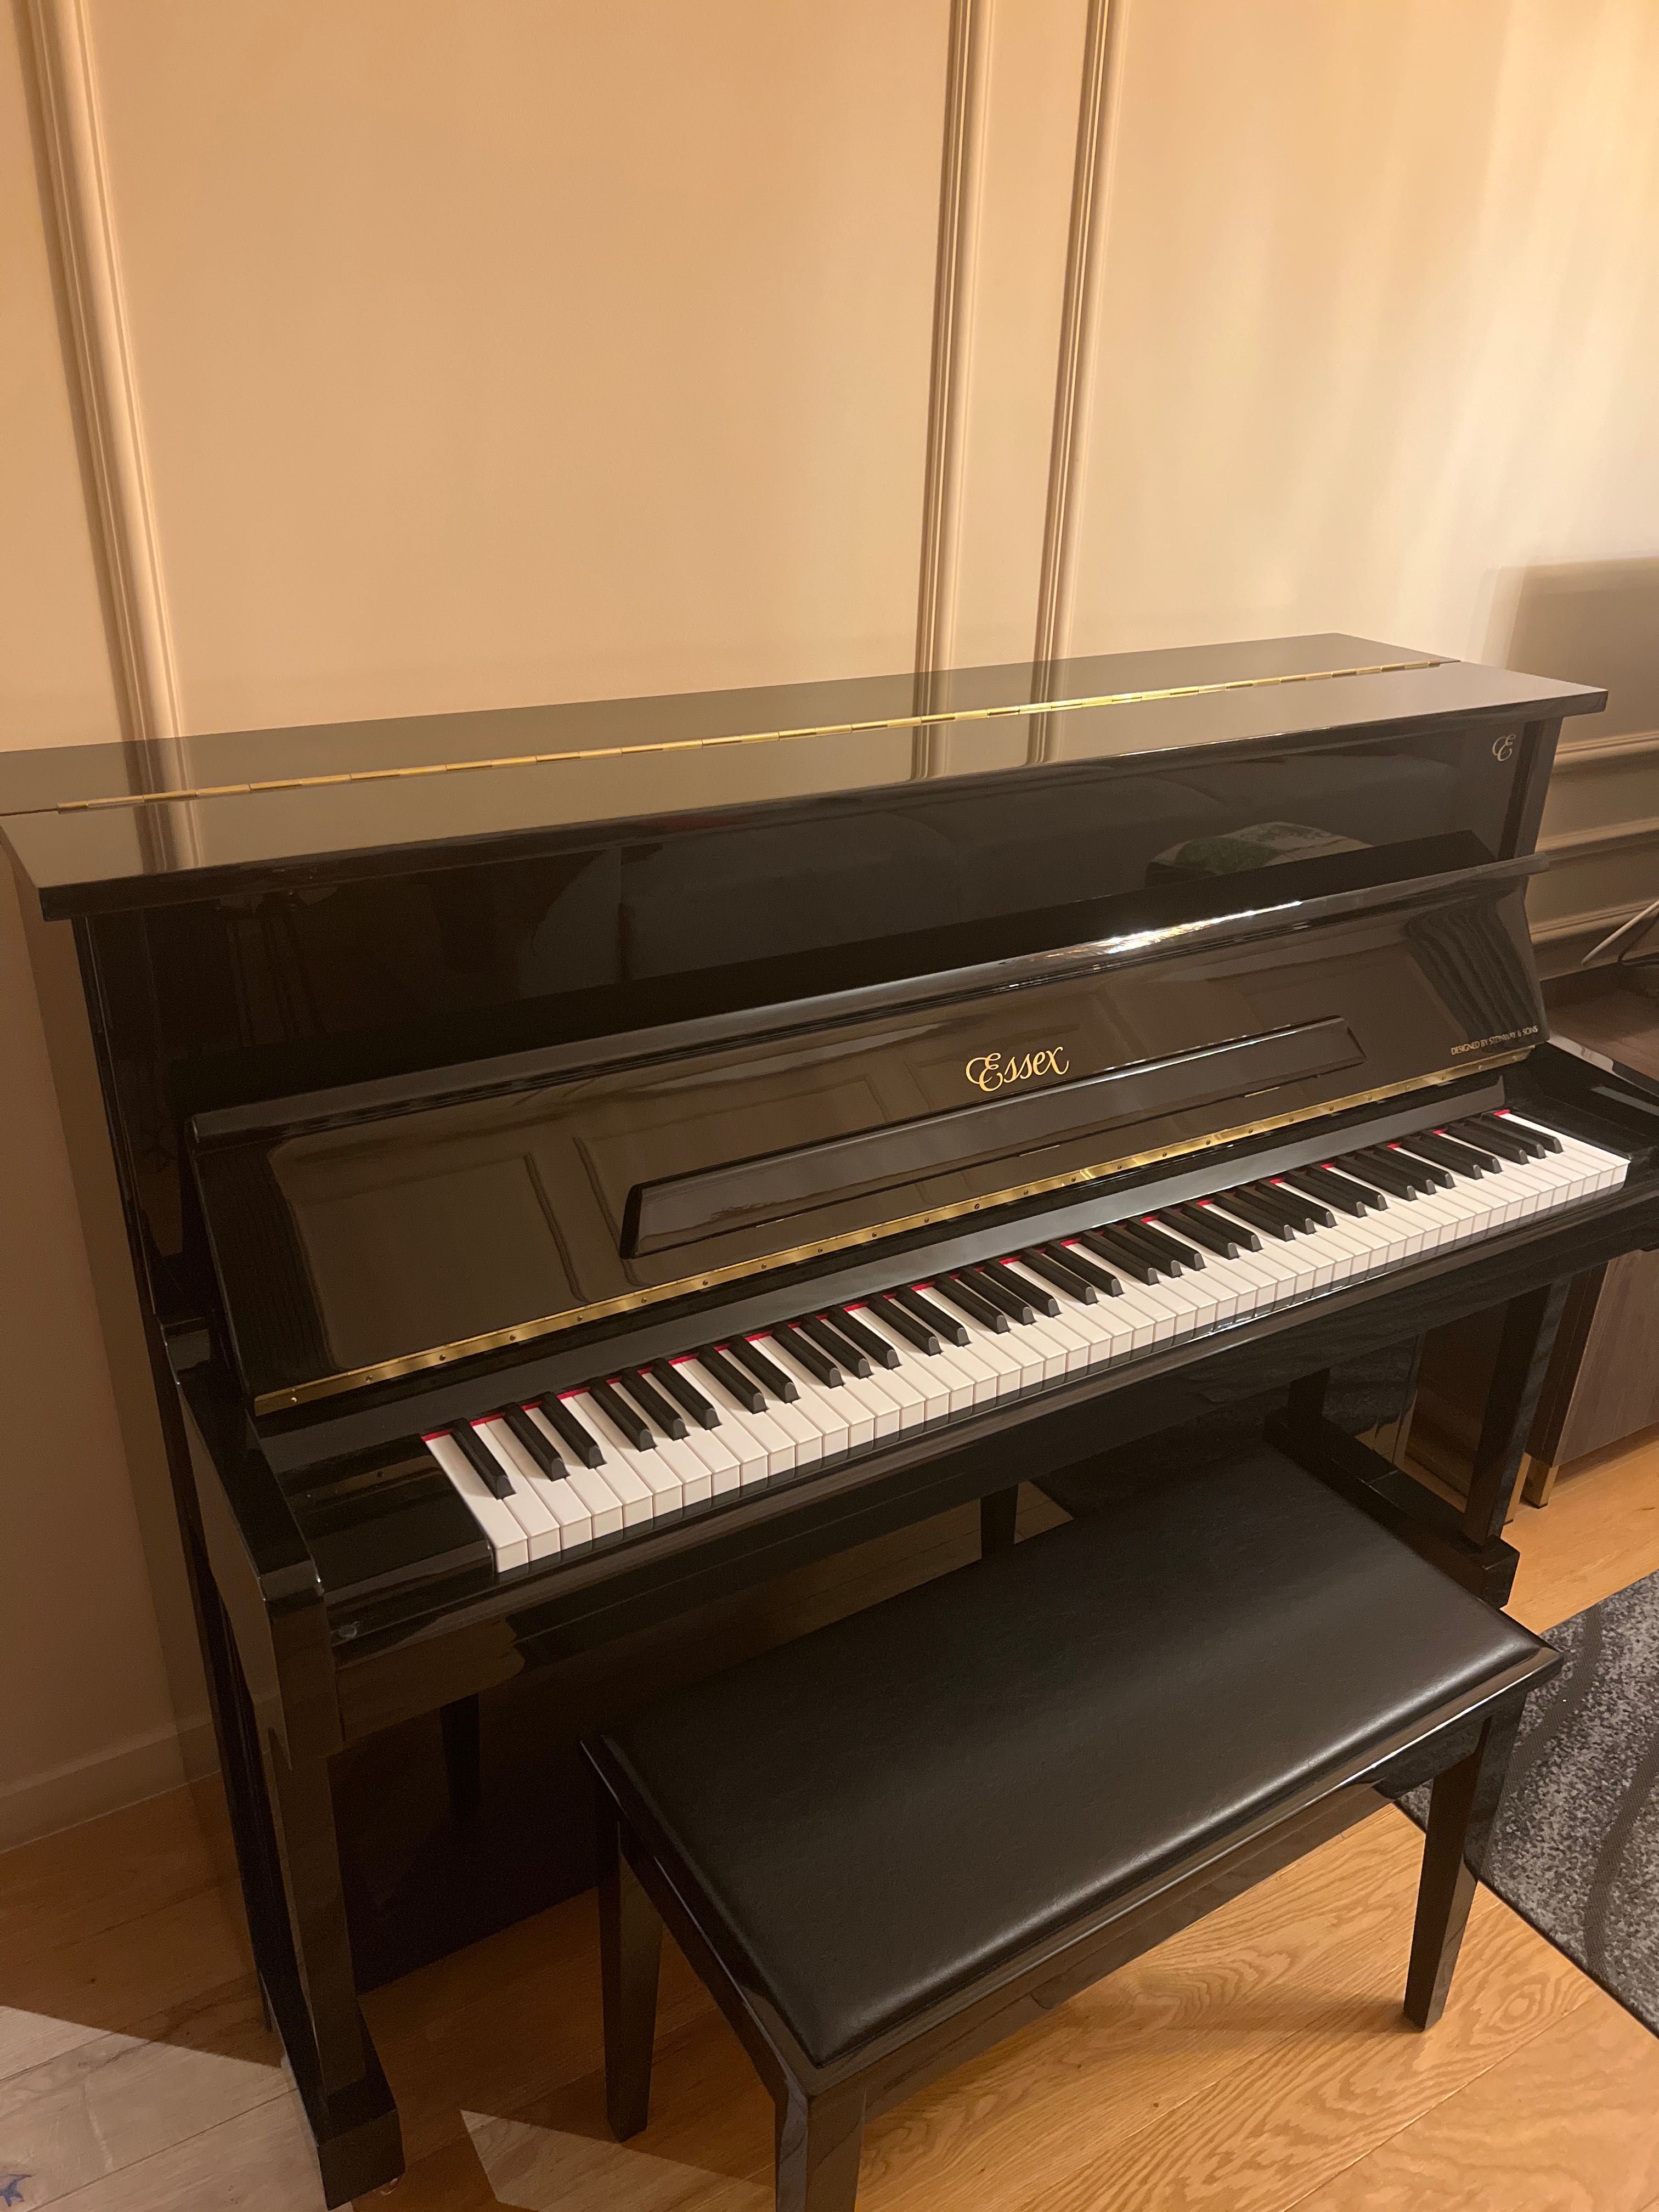 Vand pianina Essex (Steinway) cumparata noua, stare impecabila.